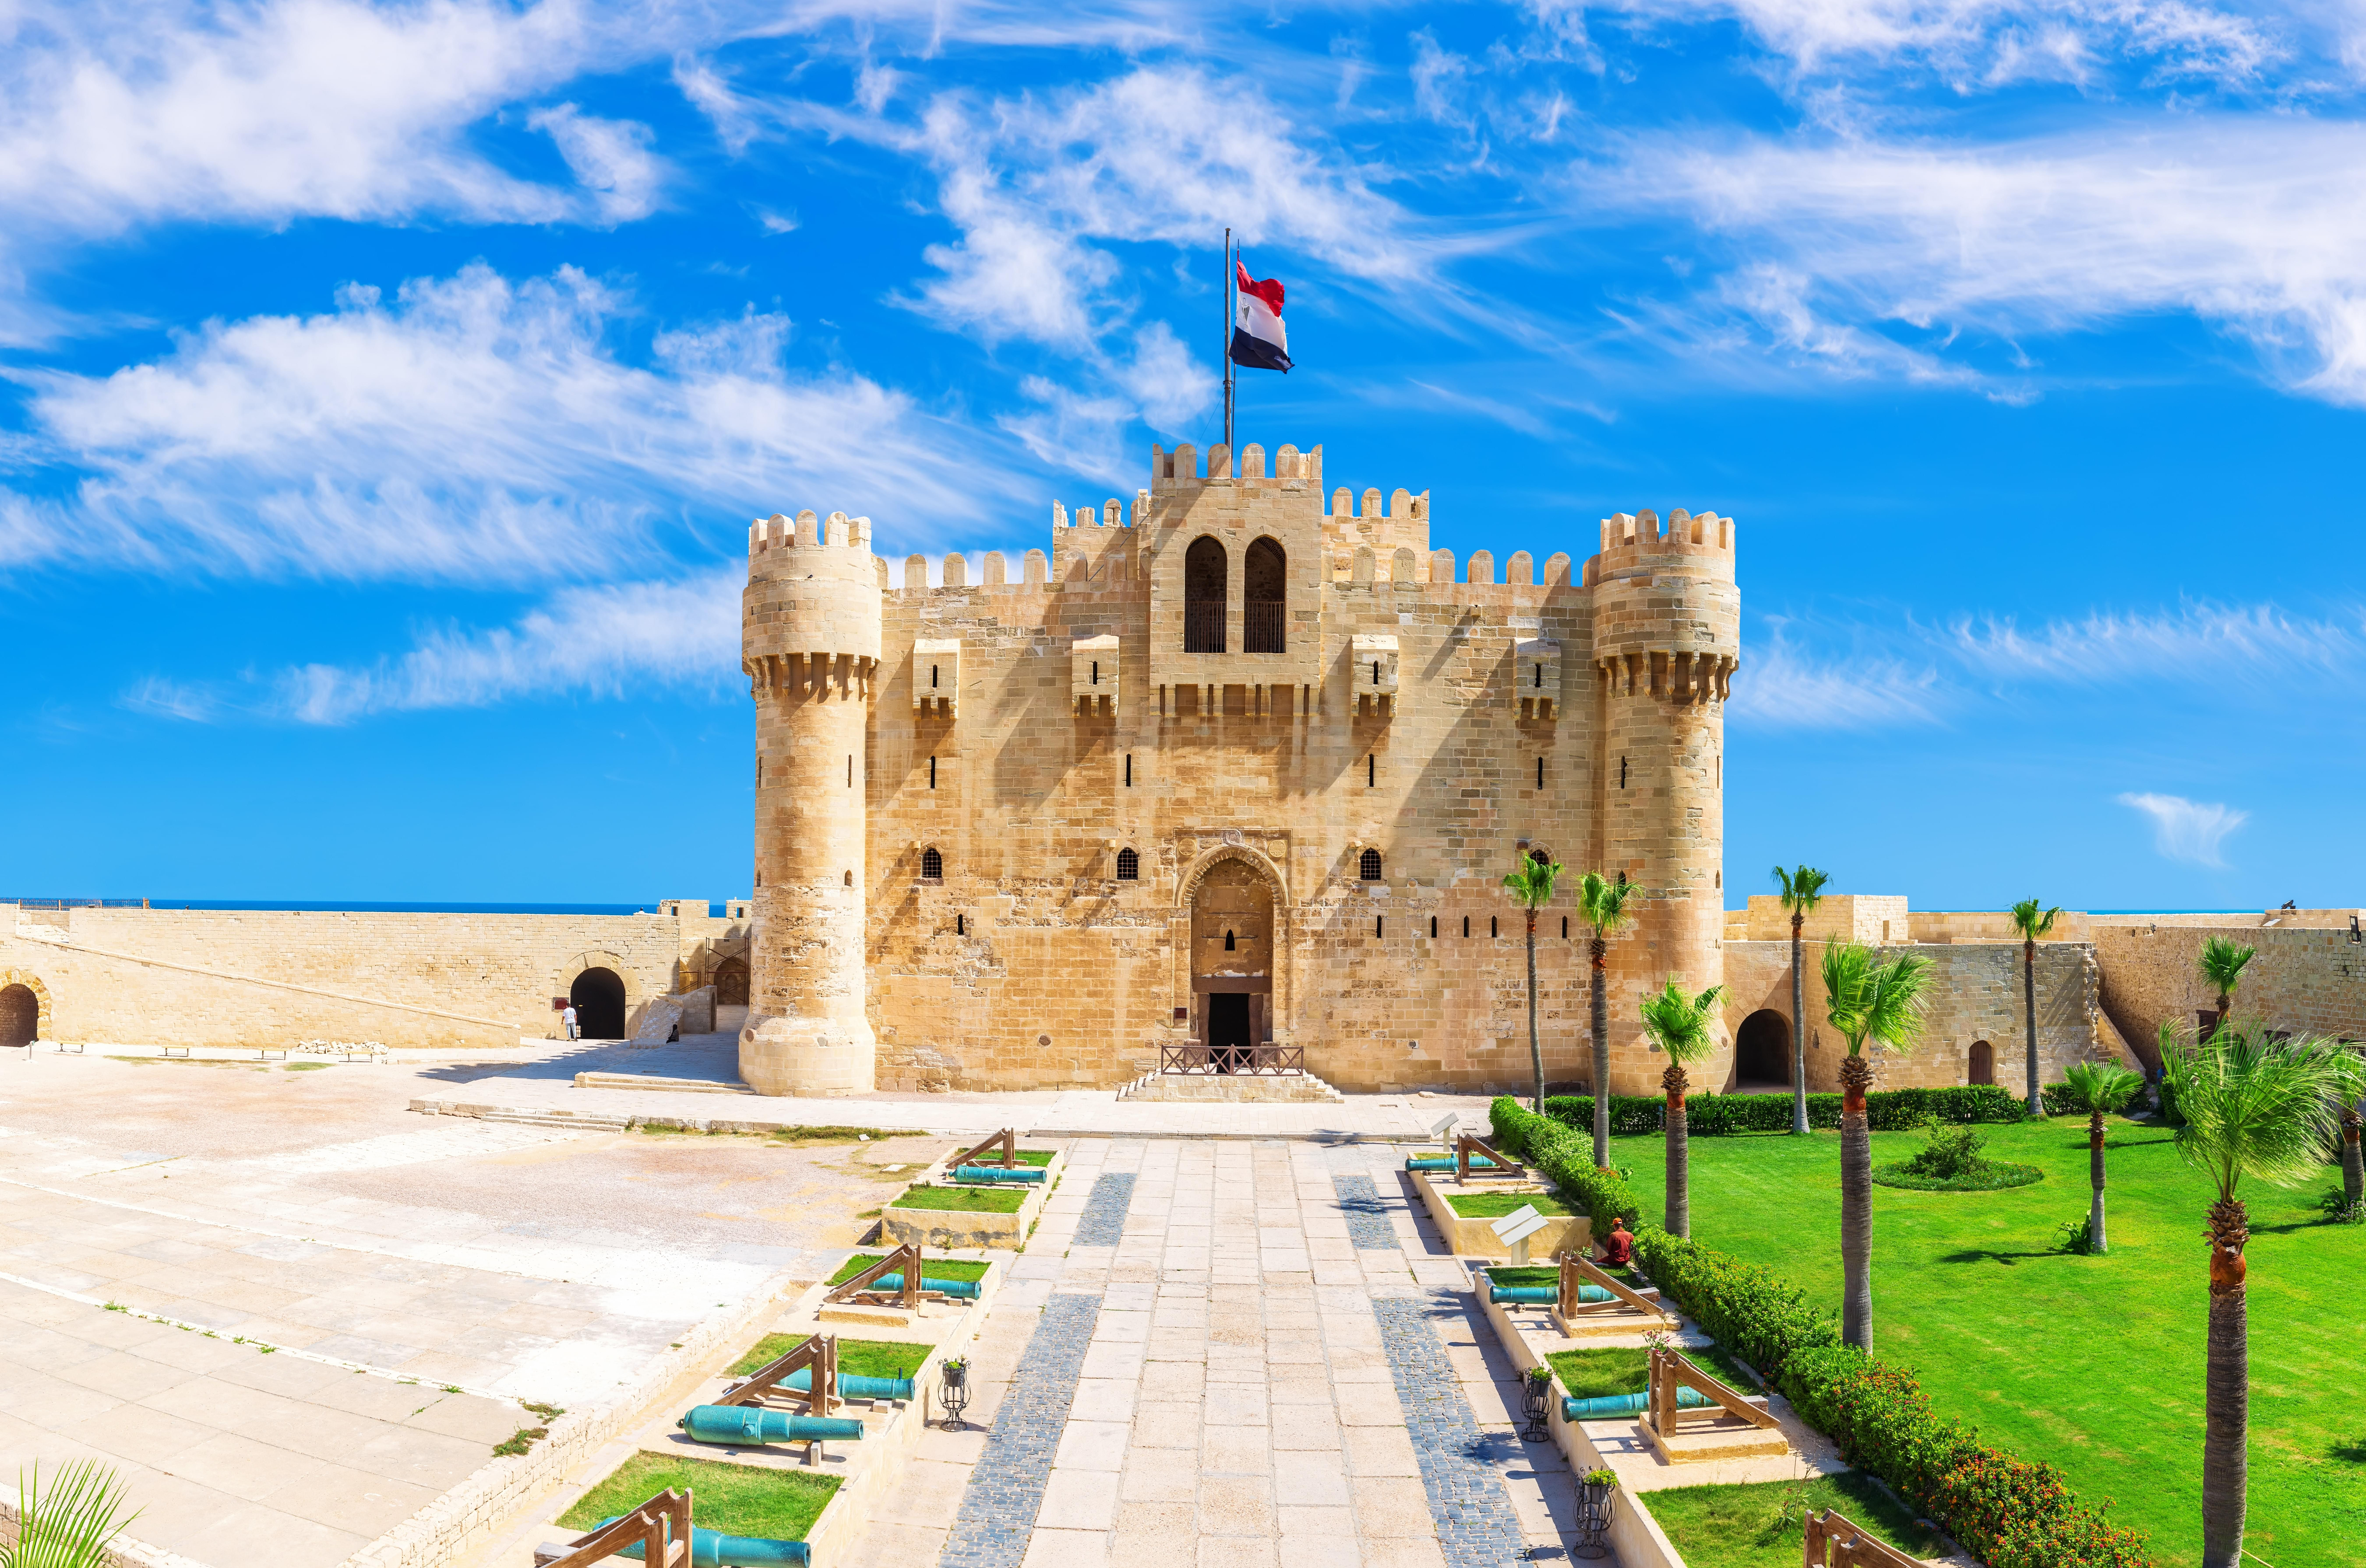 Egypt Tour Packages | Upto 50% Off April Mega SALE